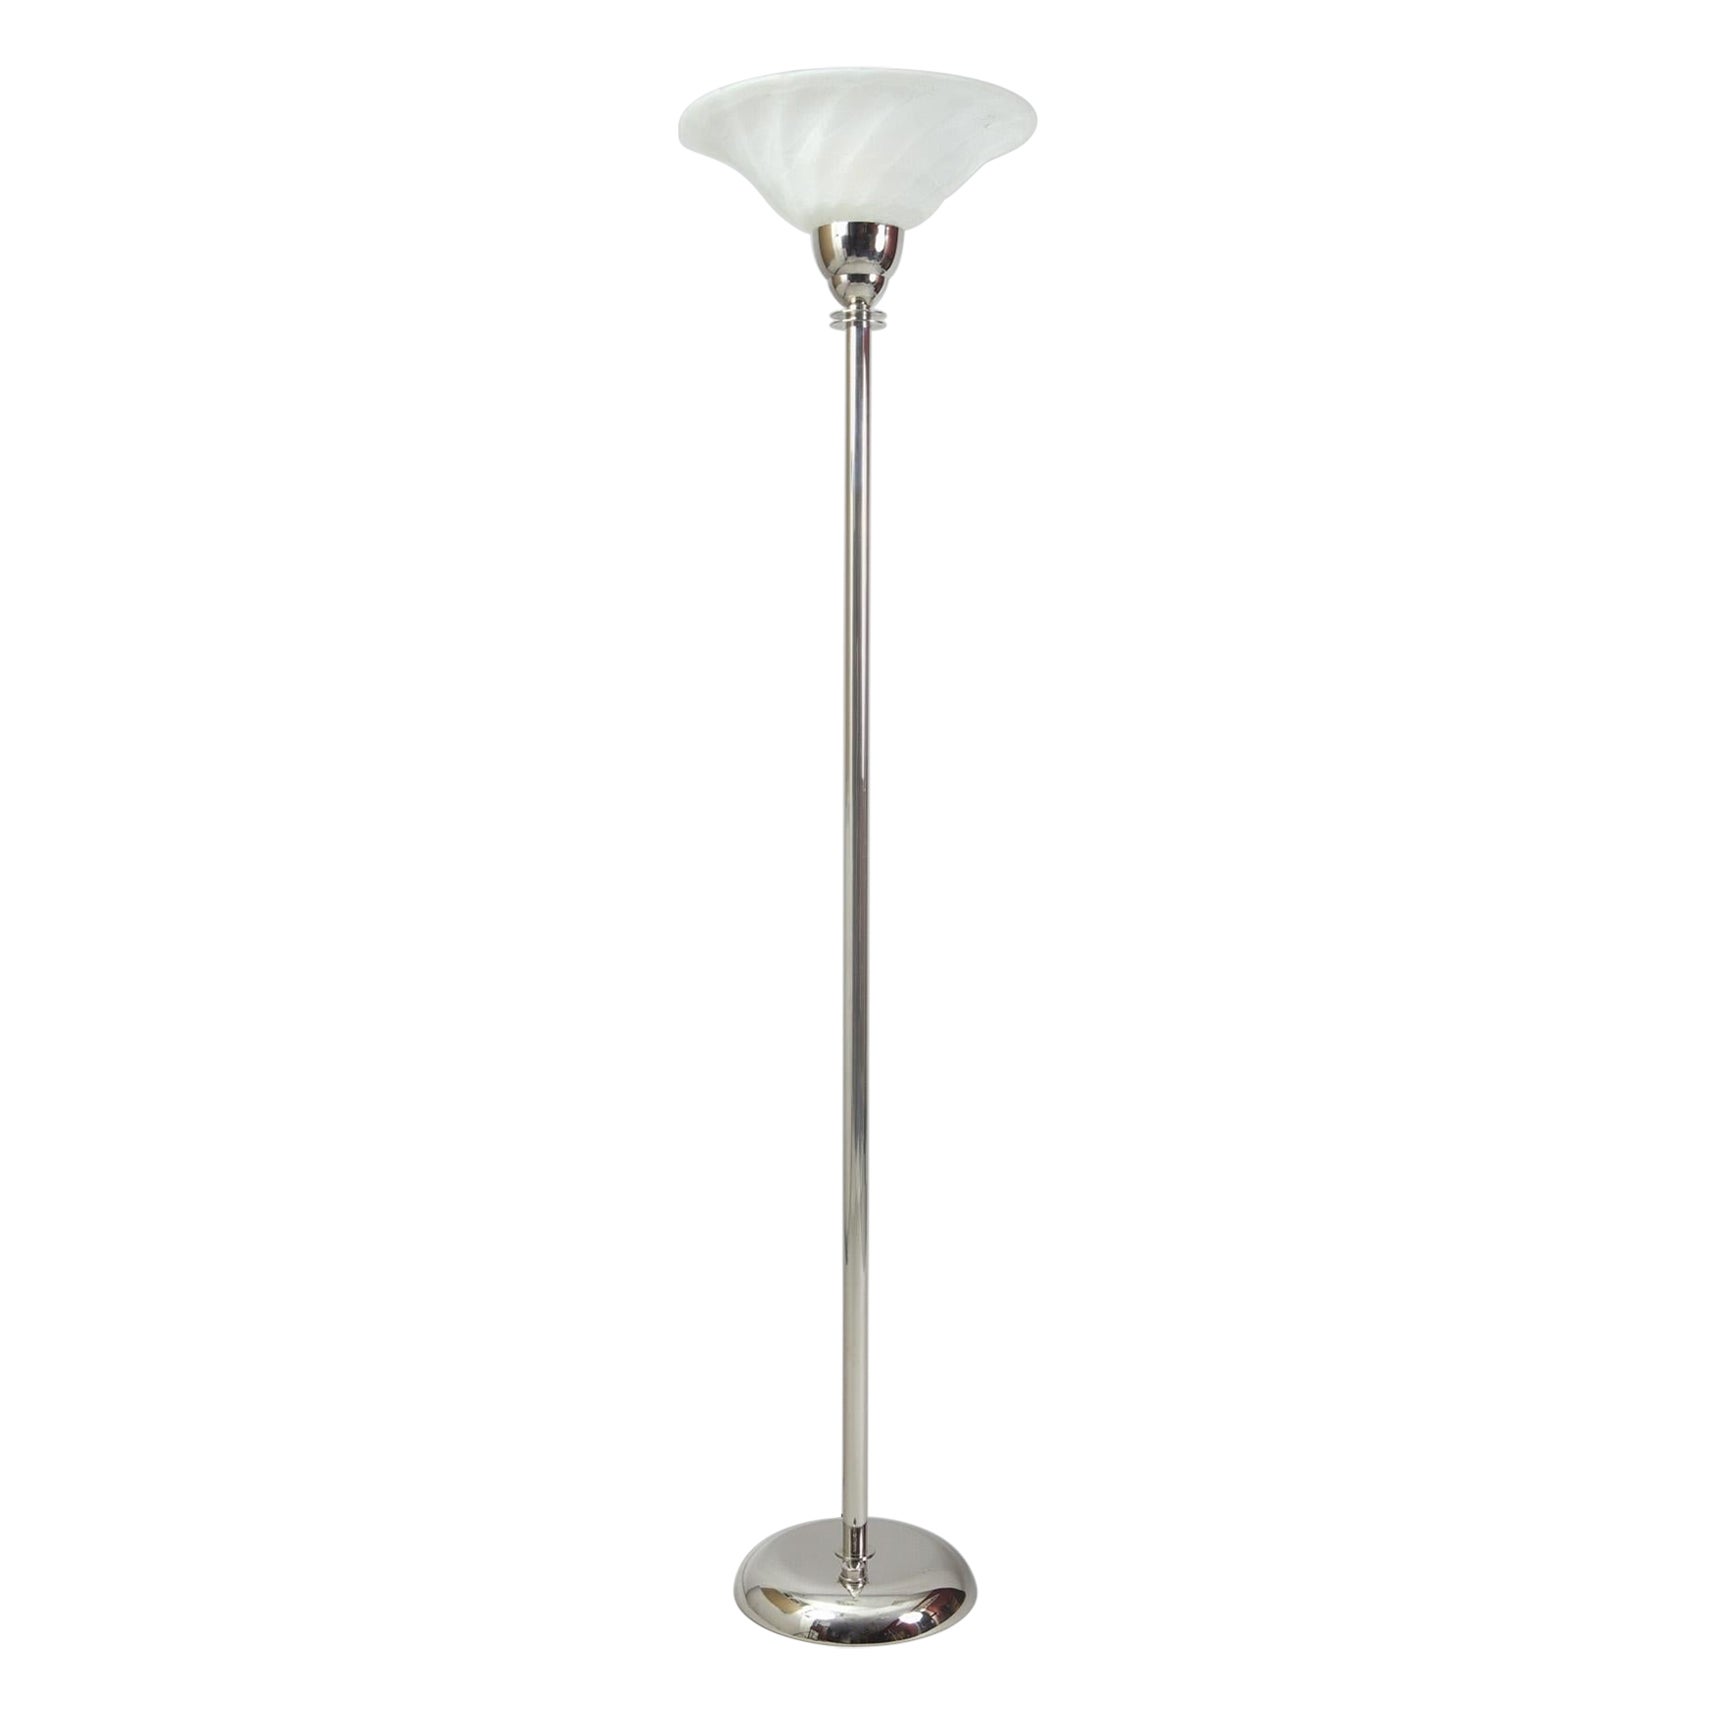 Original Art Deco Floor Lamp, Made in 1920s France, Original Condition For Sale